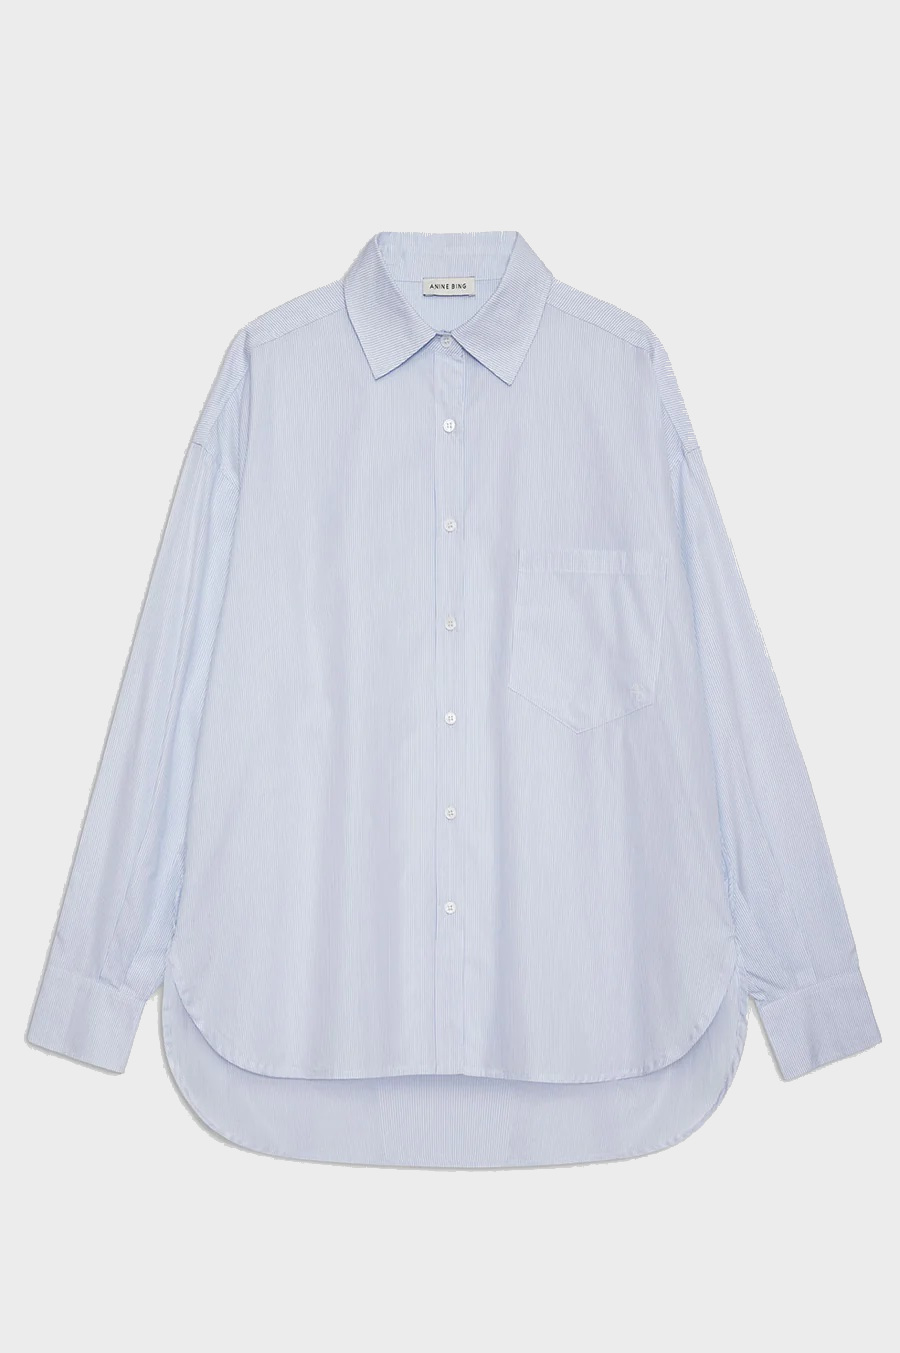 ANINE BING Chrissy Shirt in Blue/White Stripe XS